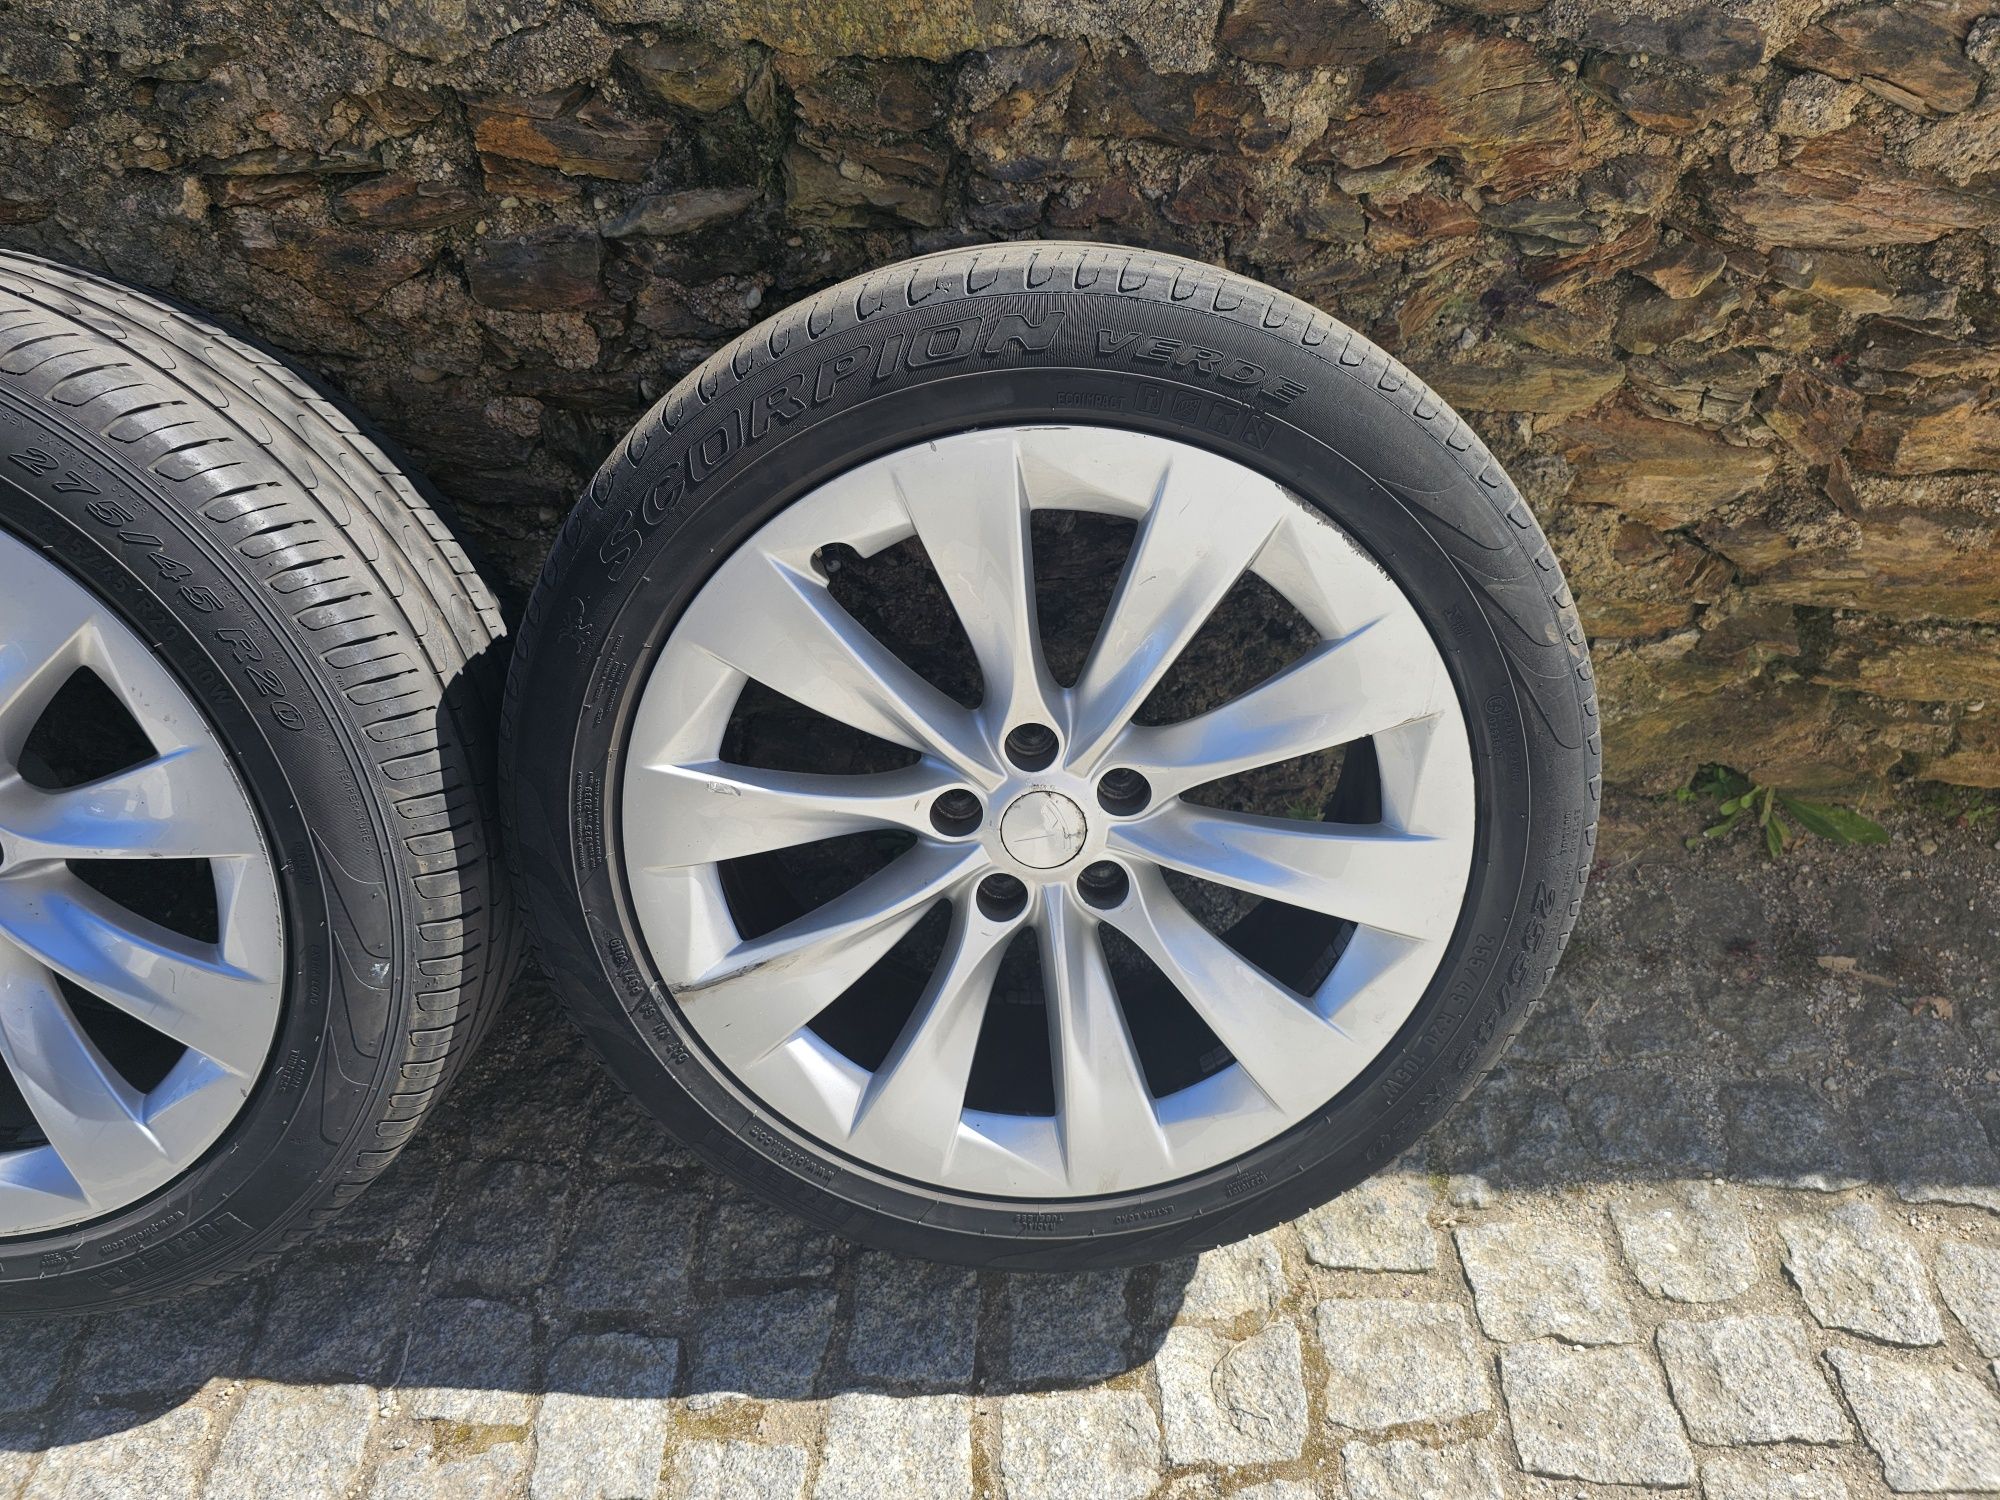 Jantes 20 5×120 Tesla BMW Mini com pneus Pireli
Possíve